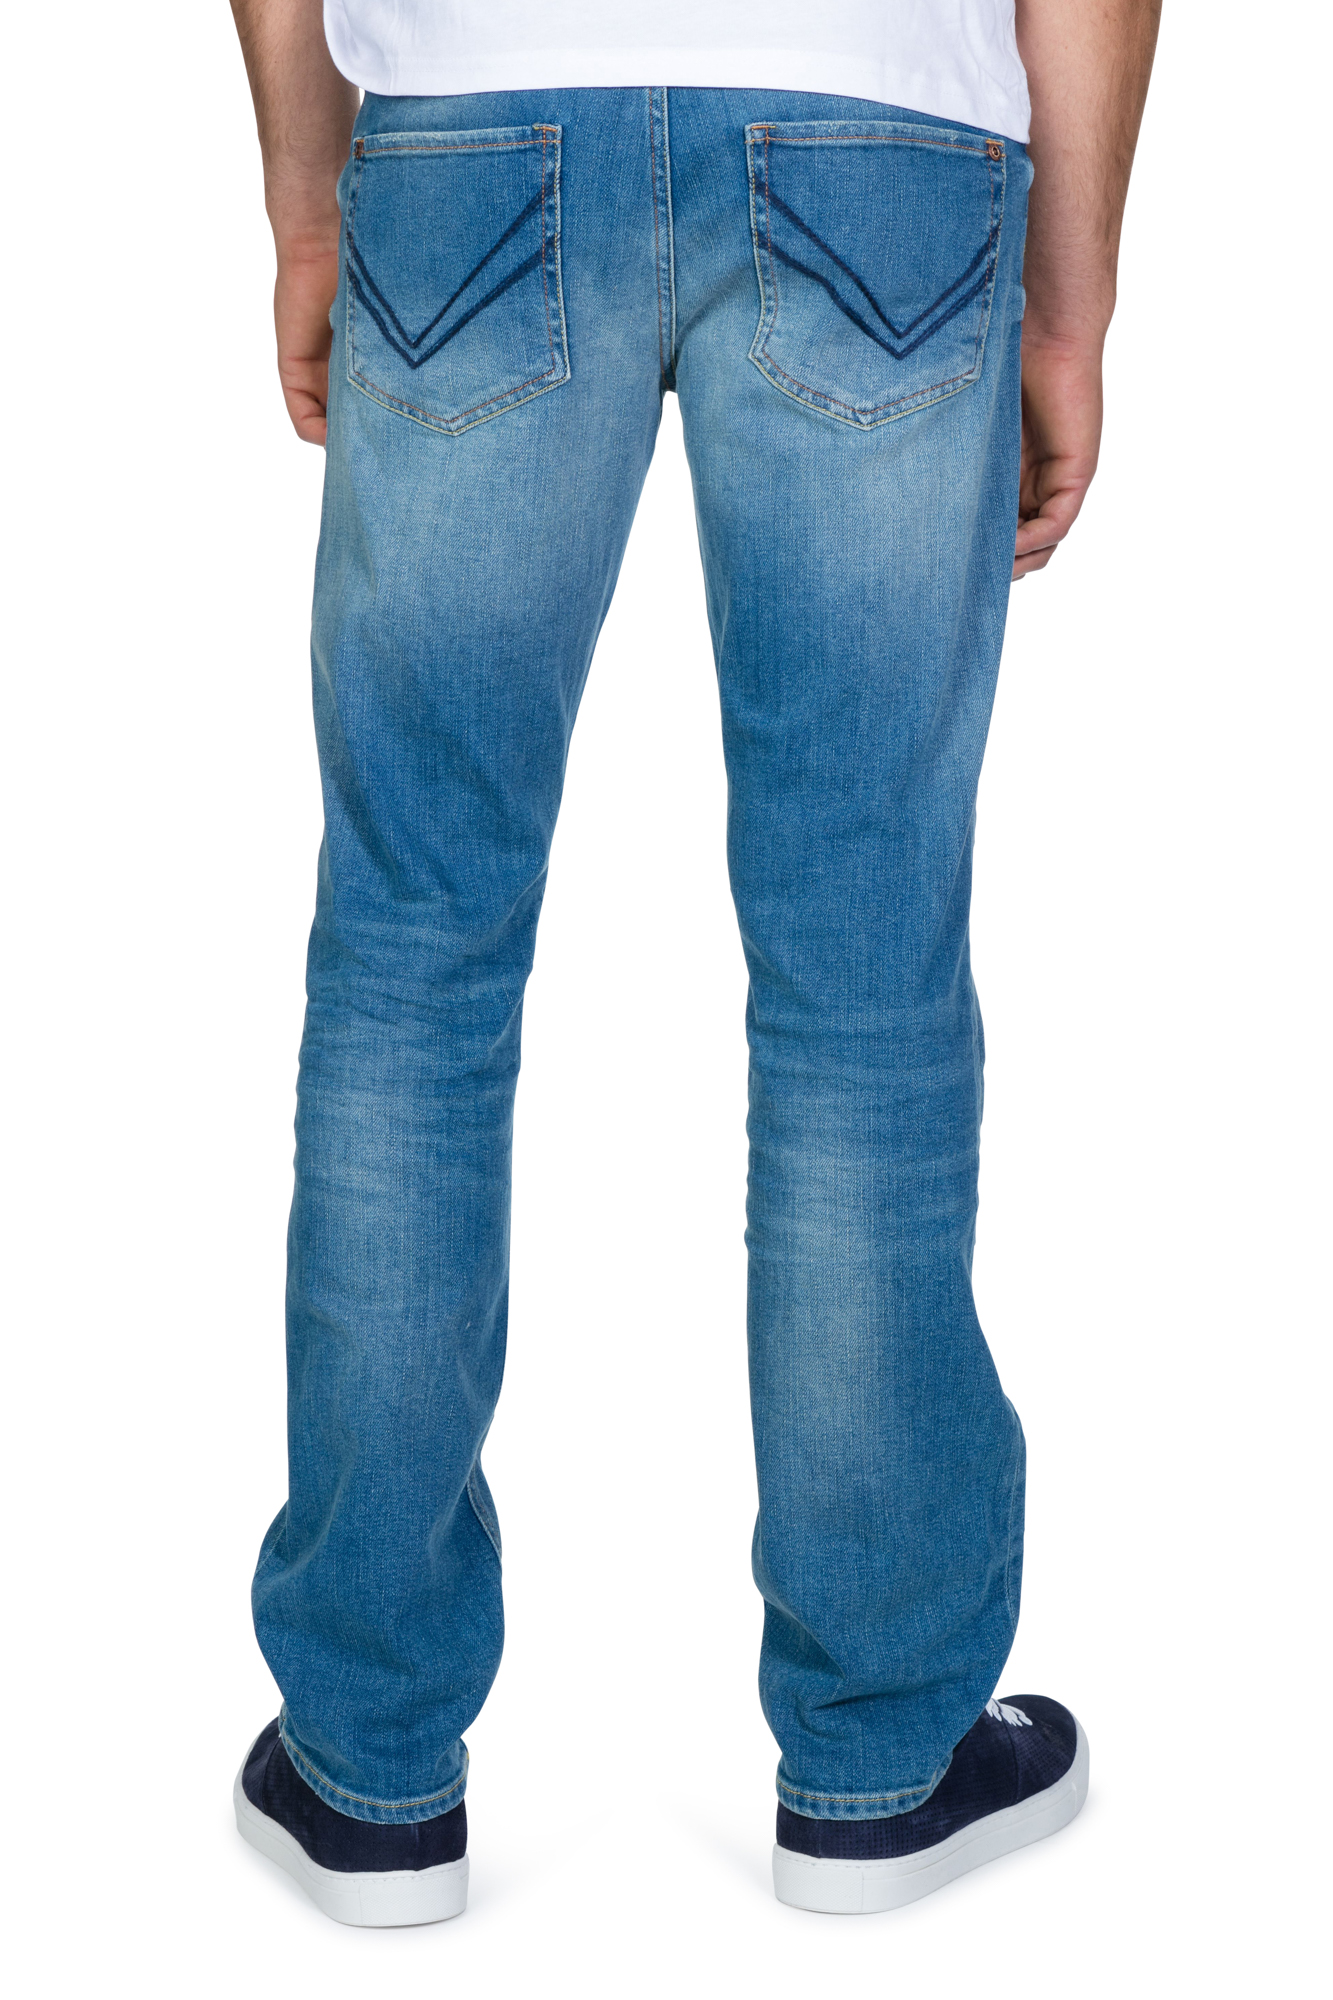 jeans_homme_redman_noah_denim_stone_used_3.jpg